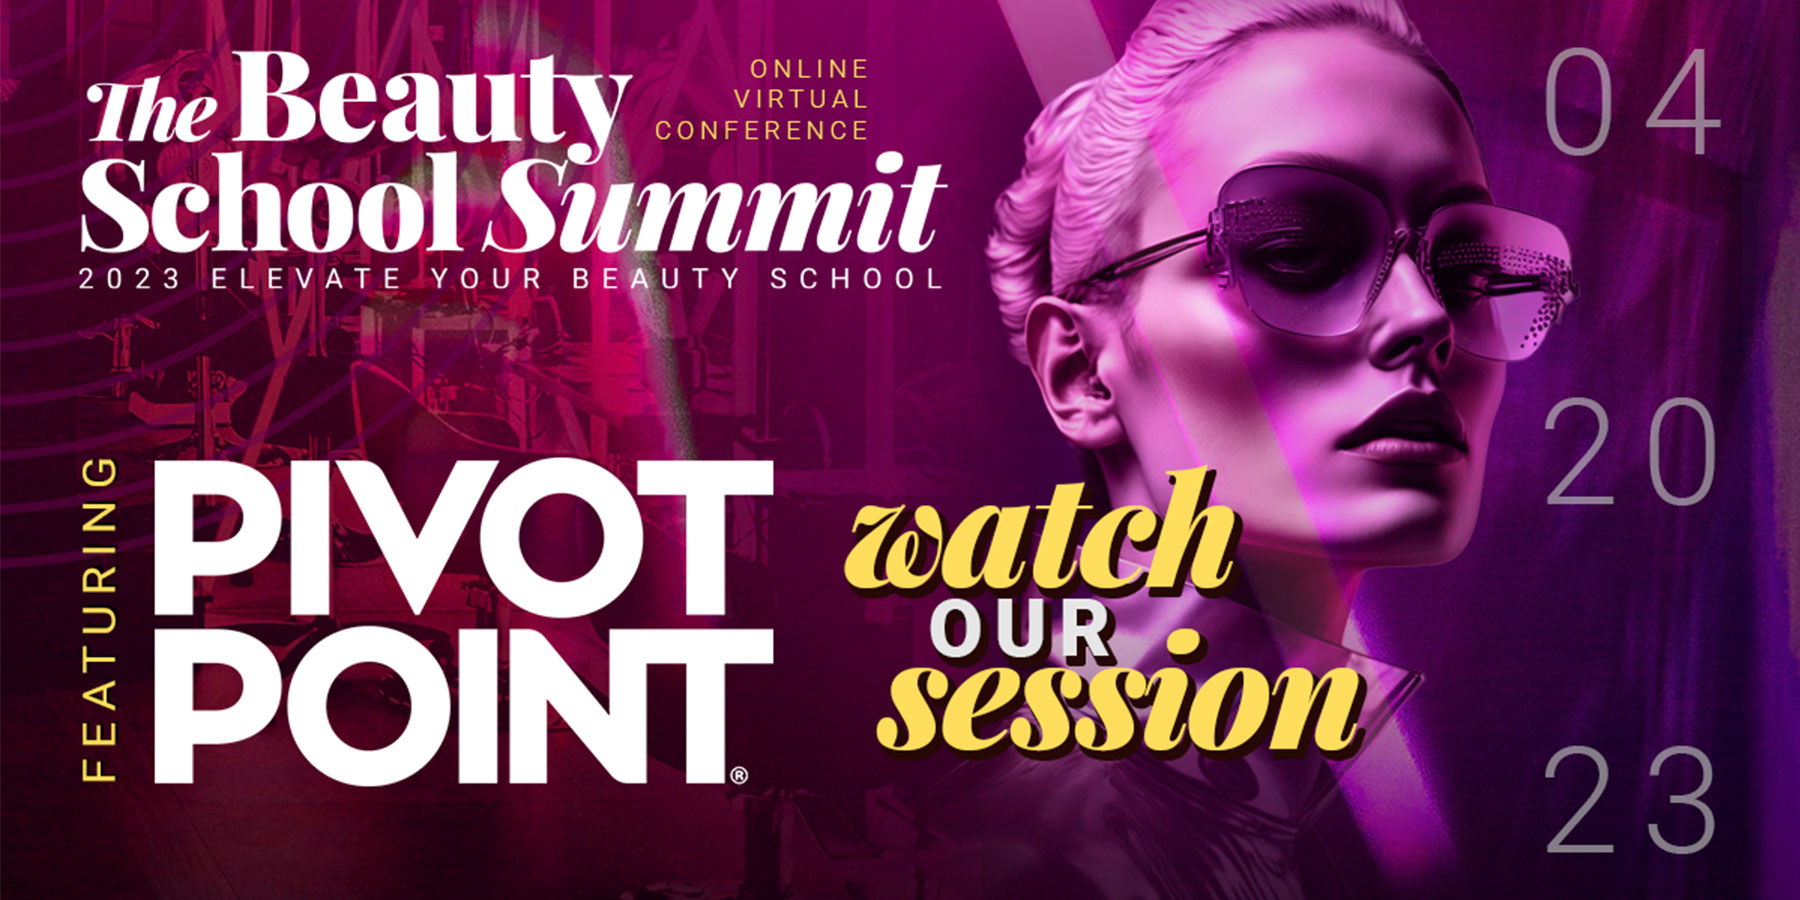 The Beauty School Summit